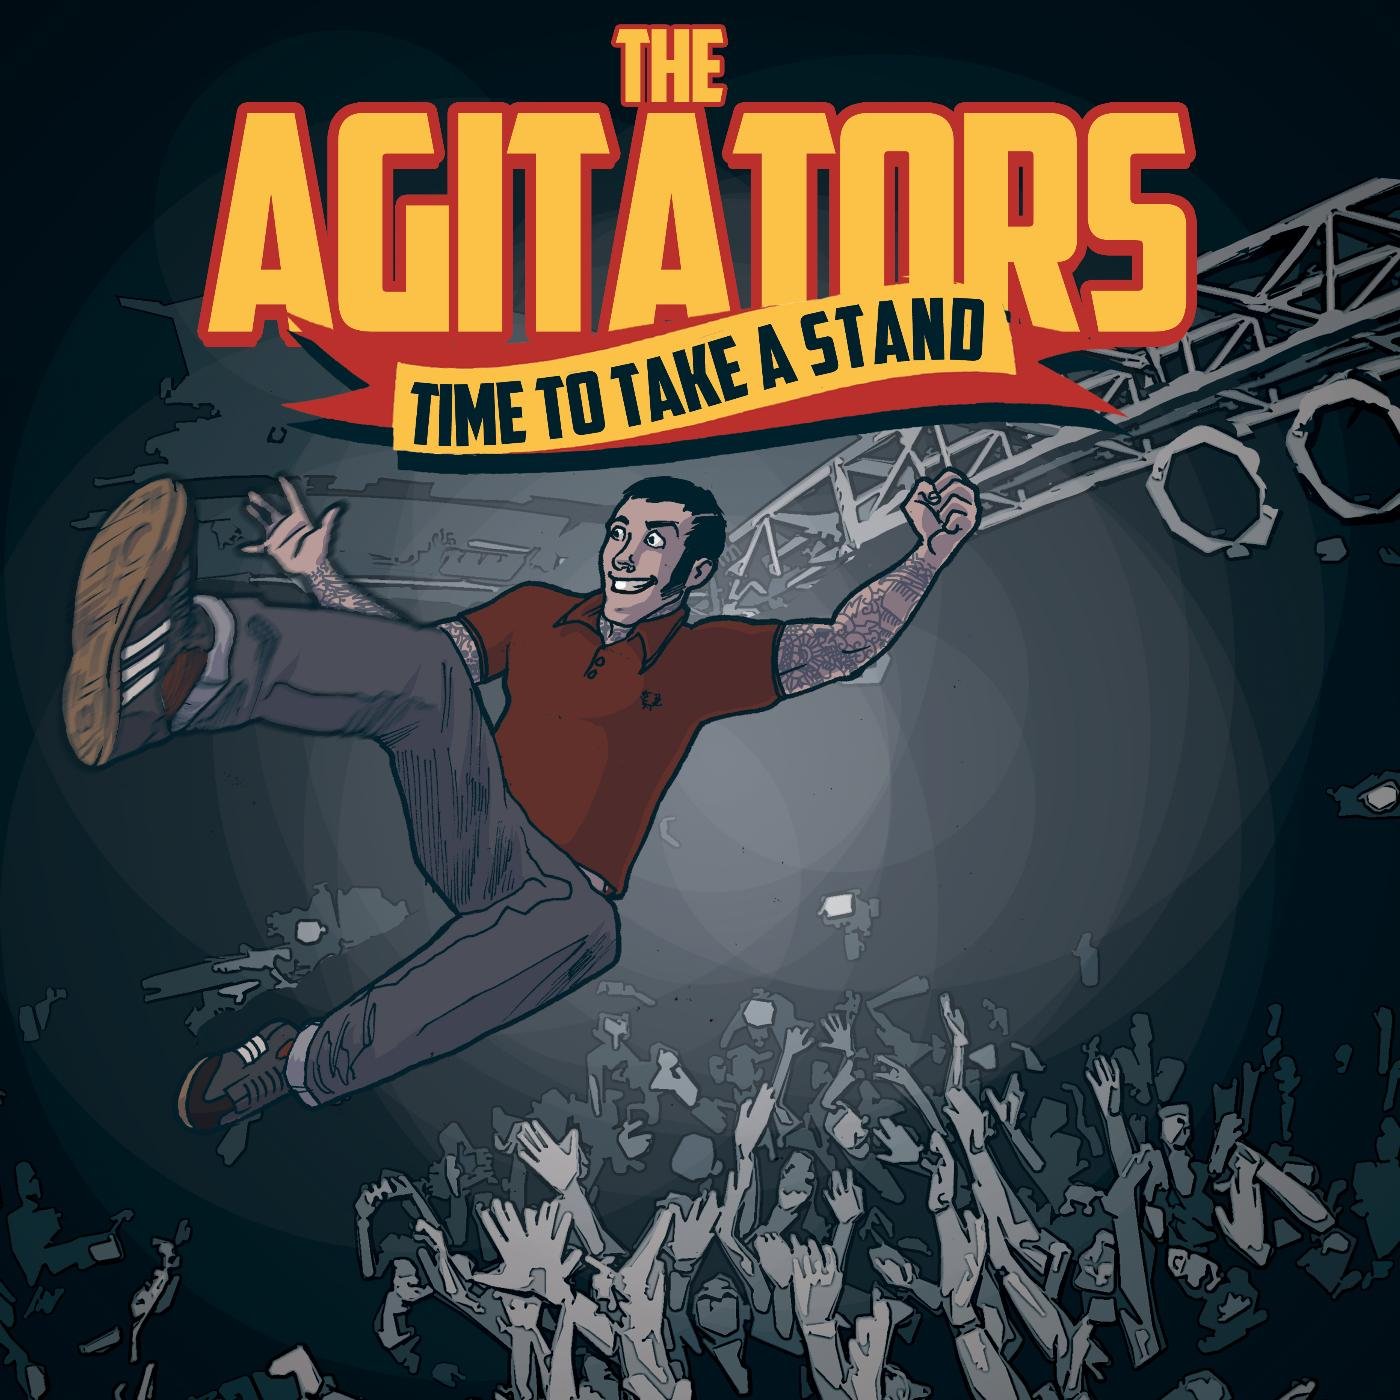 The Agitators-Time To Take A Stand-DIGIPAK-CD-FLAC-2015-FiXIE